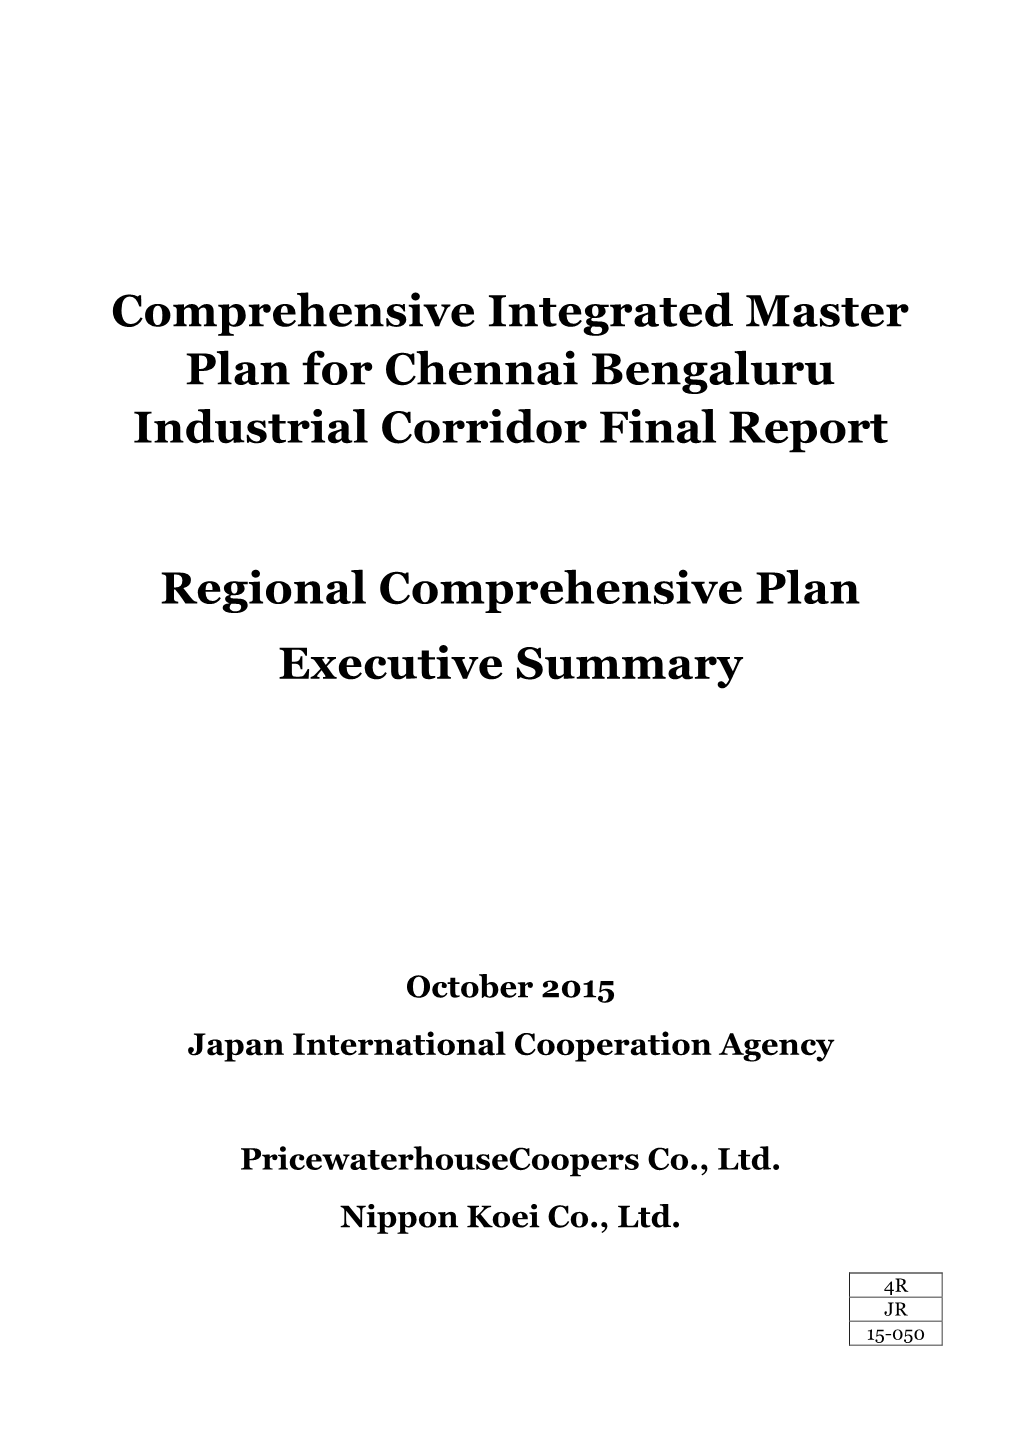 Comprehensive Integrated Master Plan for Chennai Bengaluru Industrial Corridor Final Report